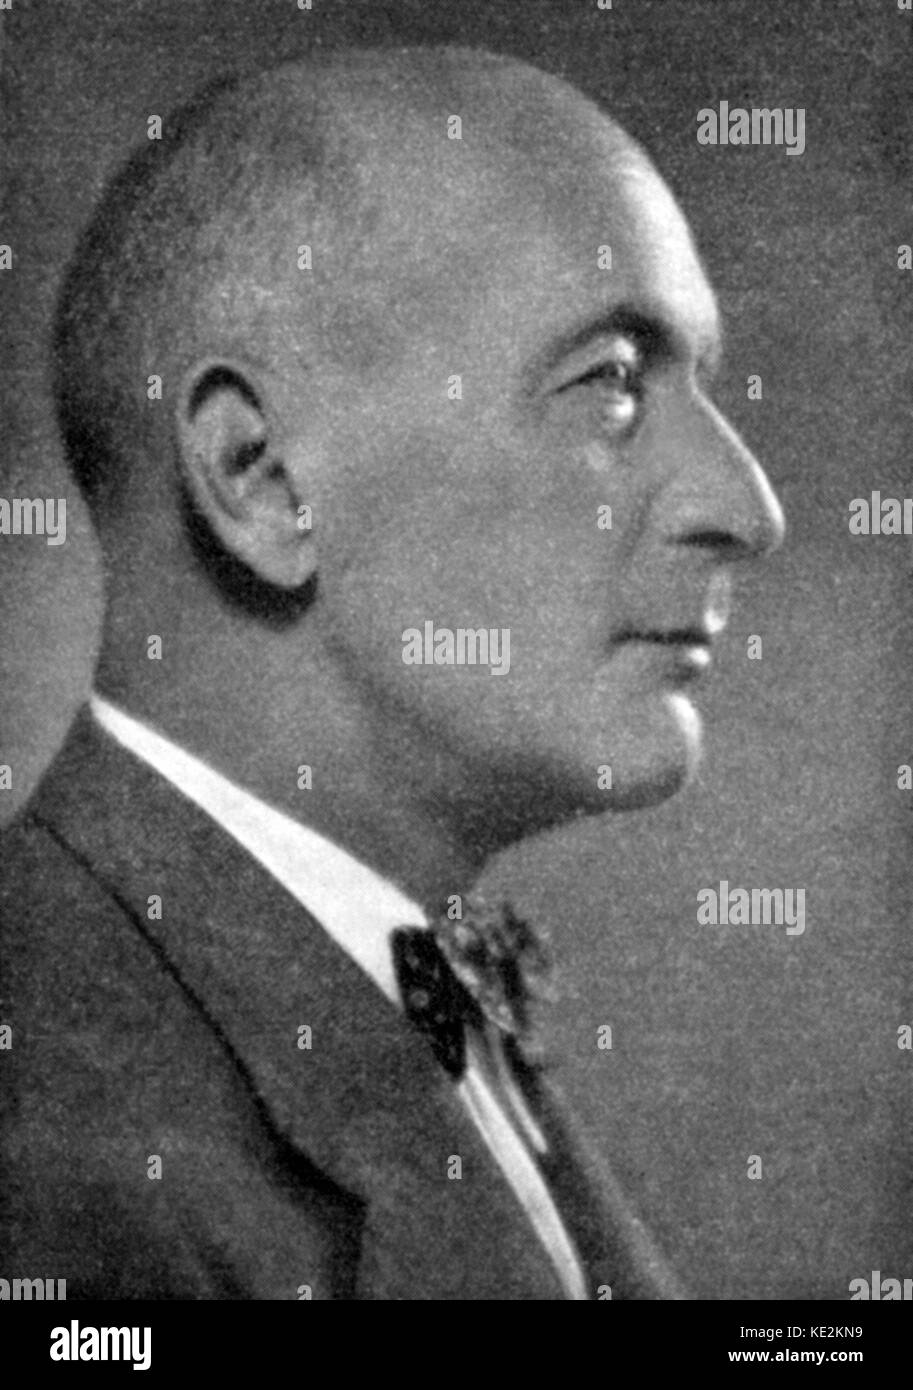 Liko, / Licco Amar - perfil vertical 1940. Violinista húngaro - establecido Amar Cuarteto 1891 - 1959 Foto de stock